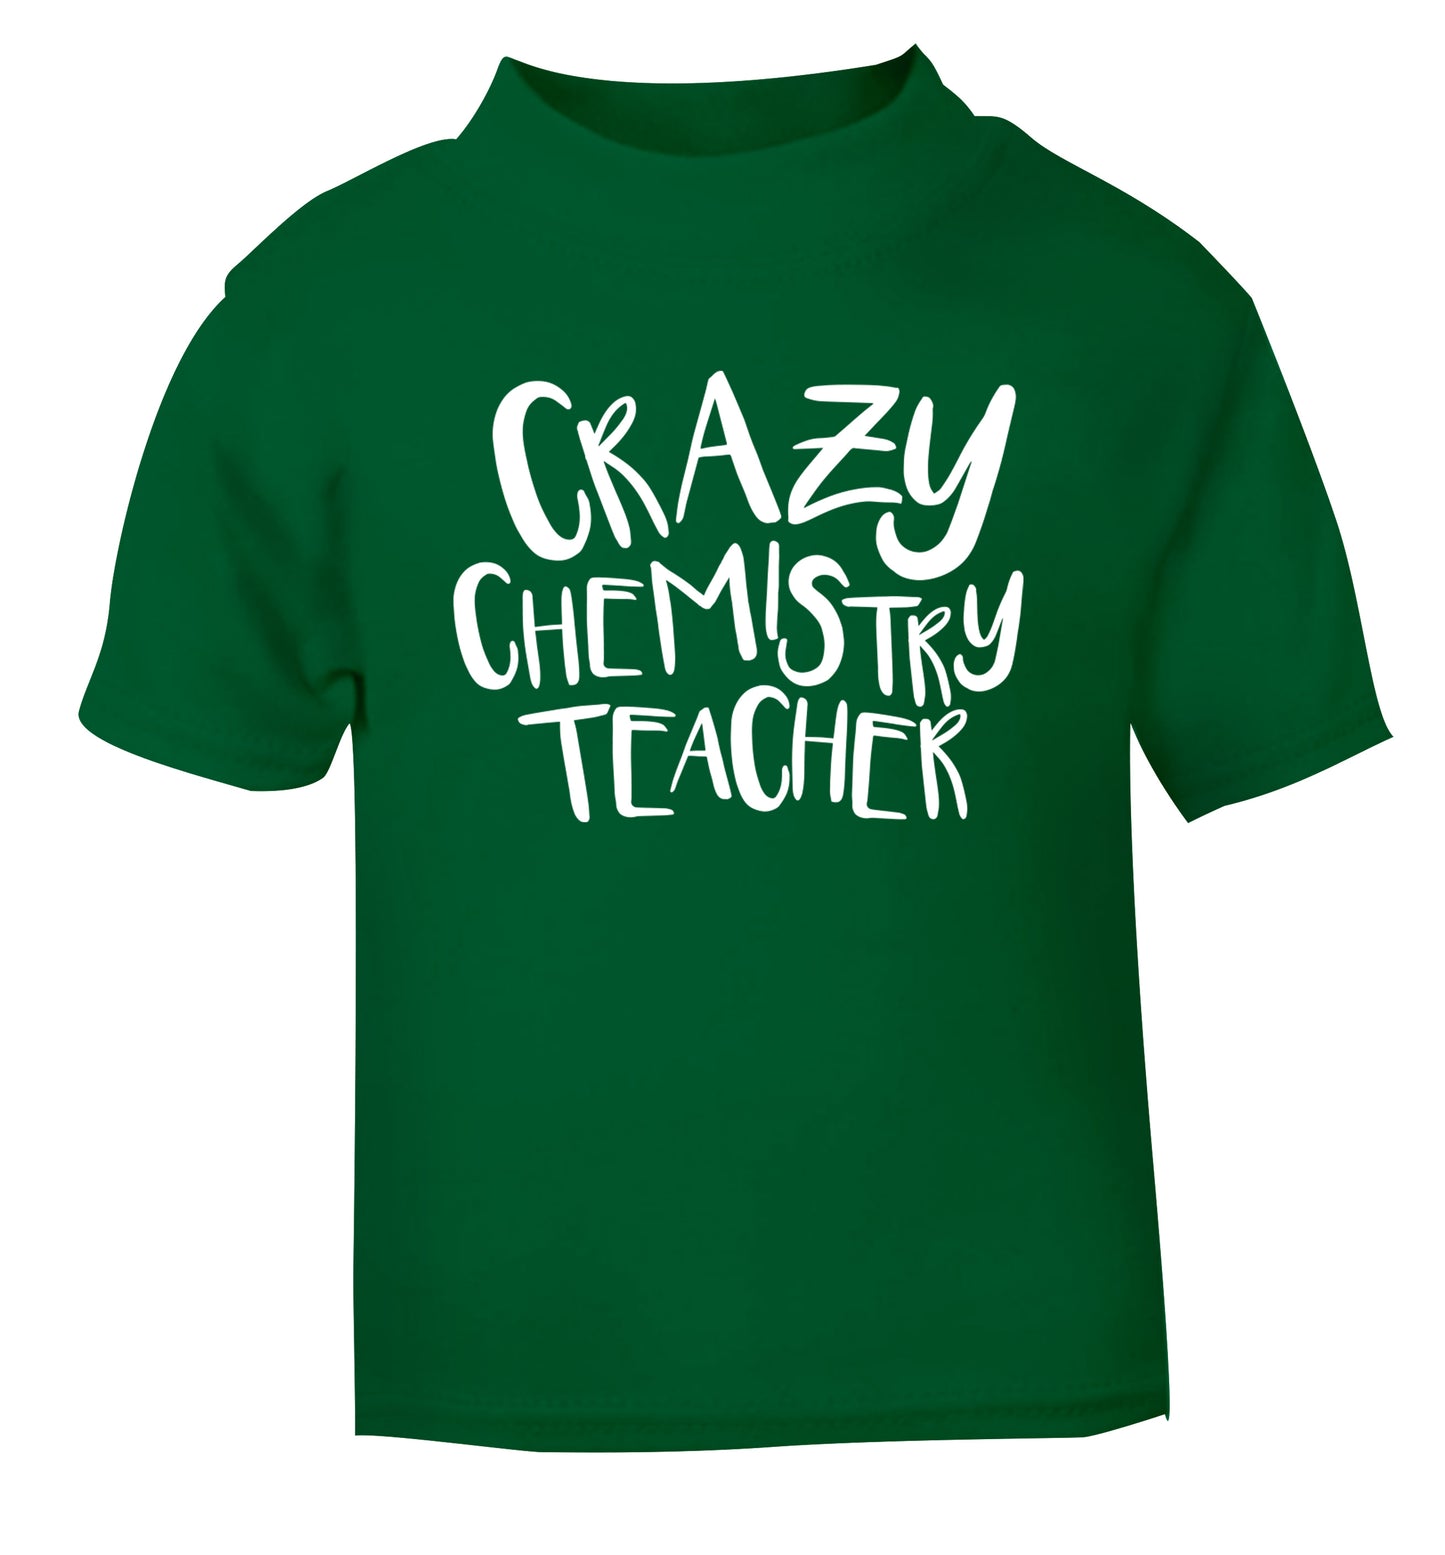 Crazy chemistry teacher green Baby Toddler Tshirt 2 Years